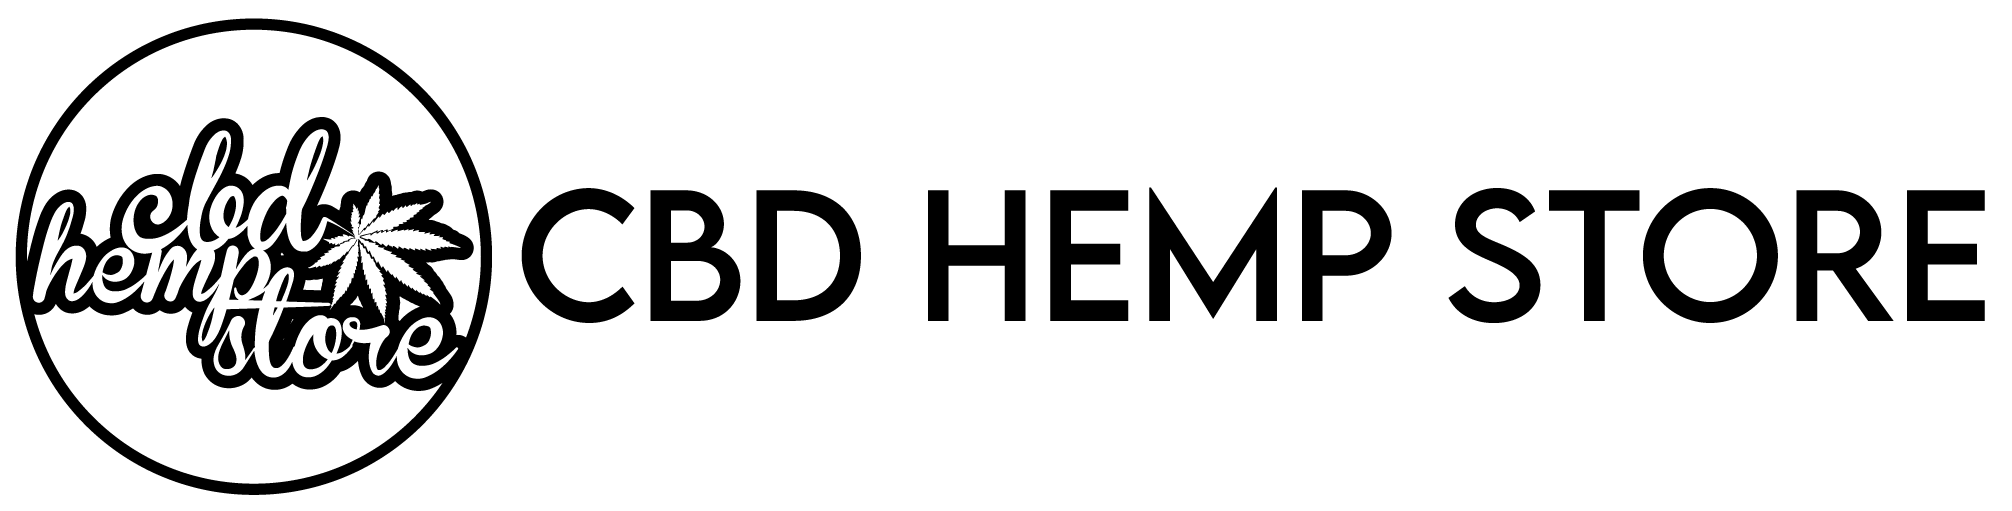 cbd-hemp-store-bassano-logo-bianco